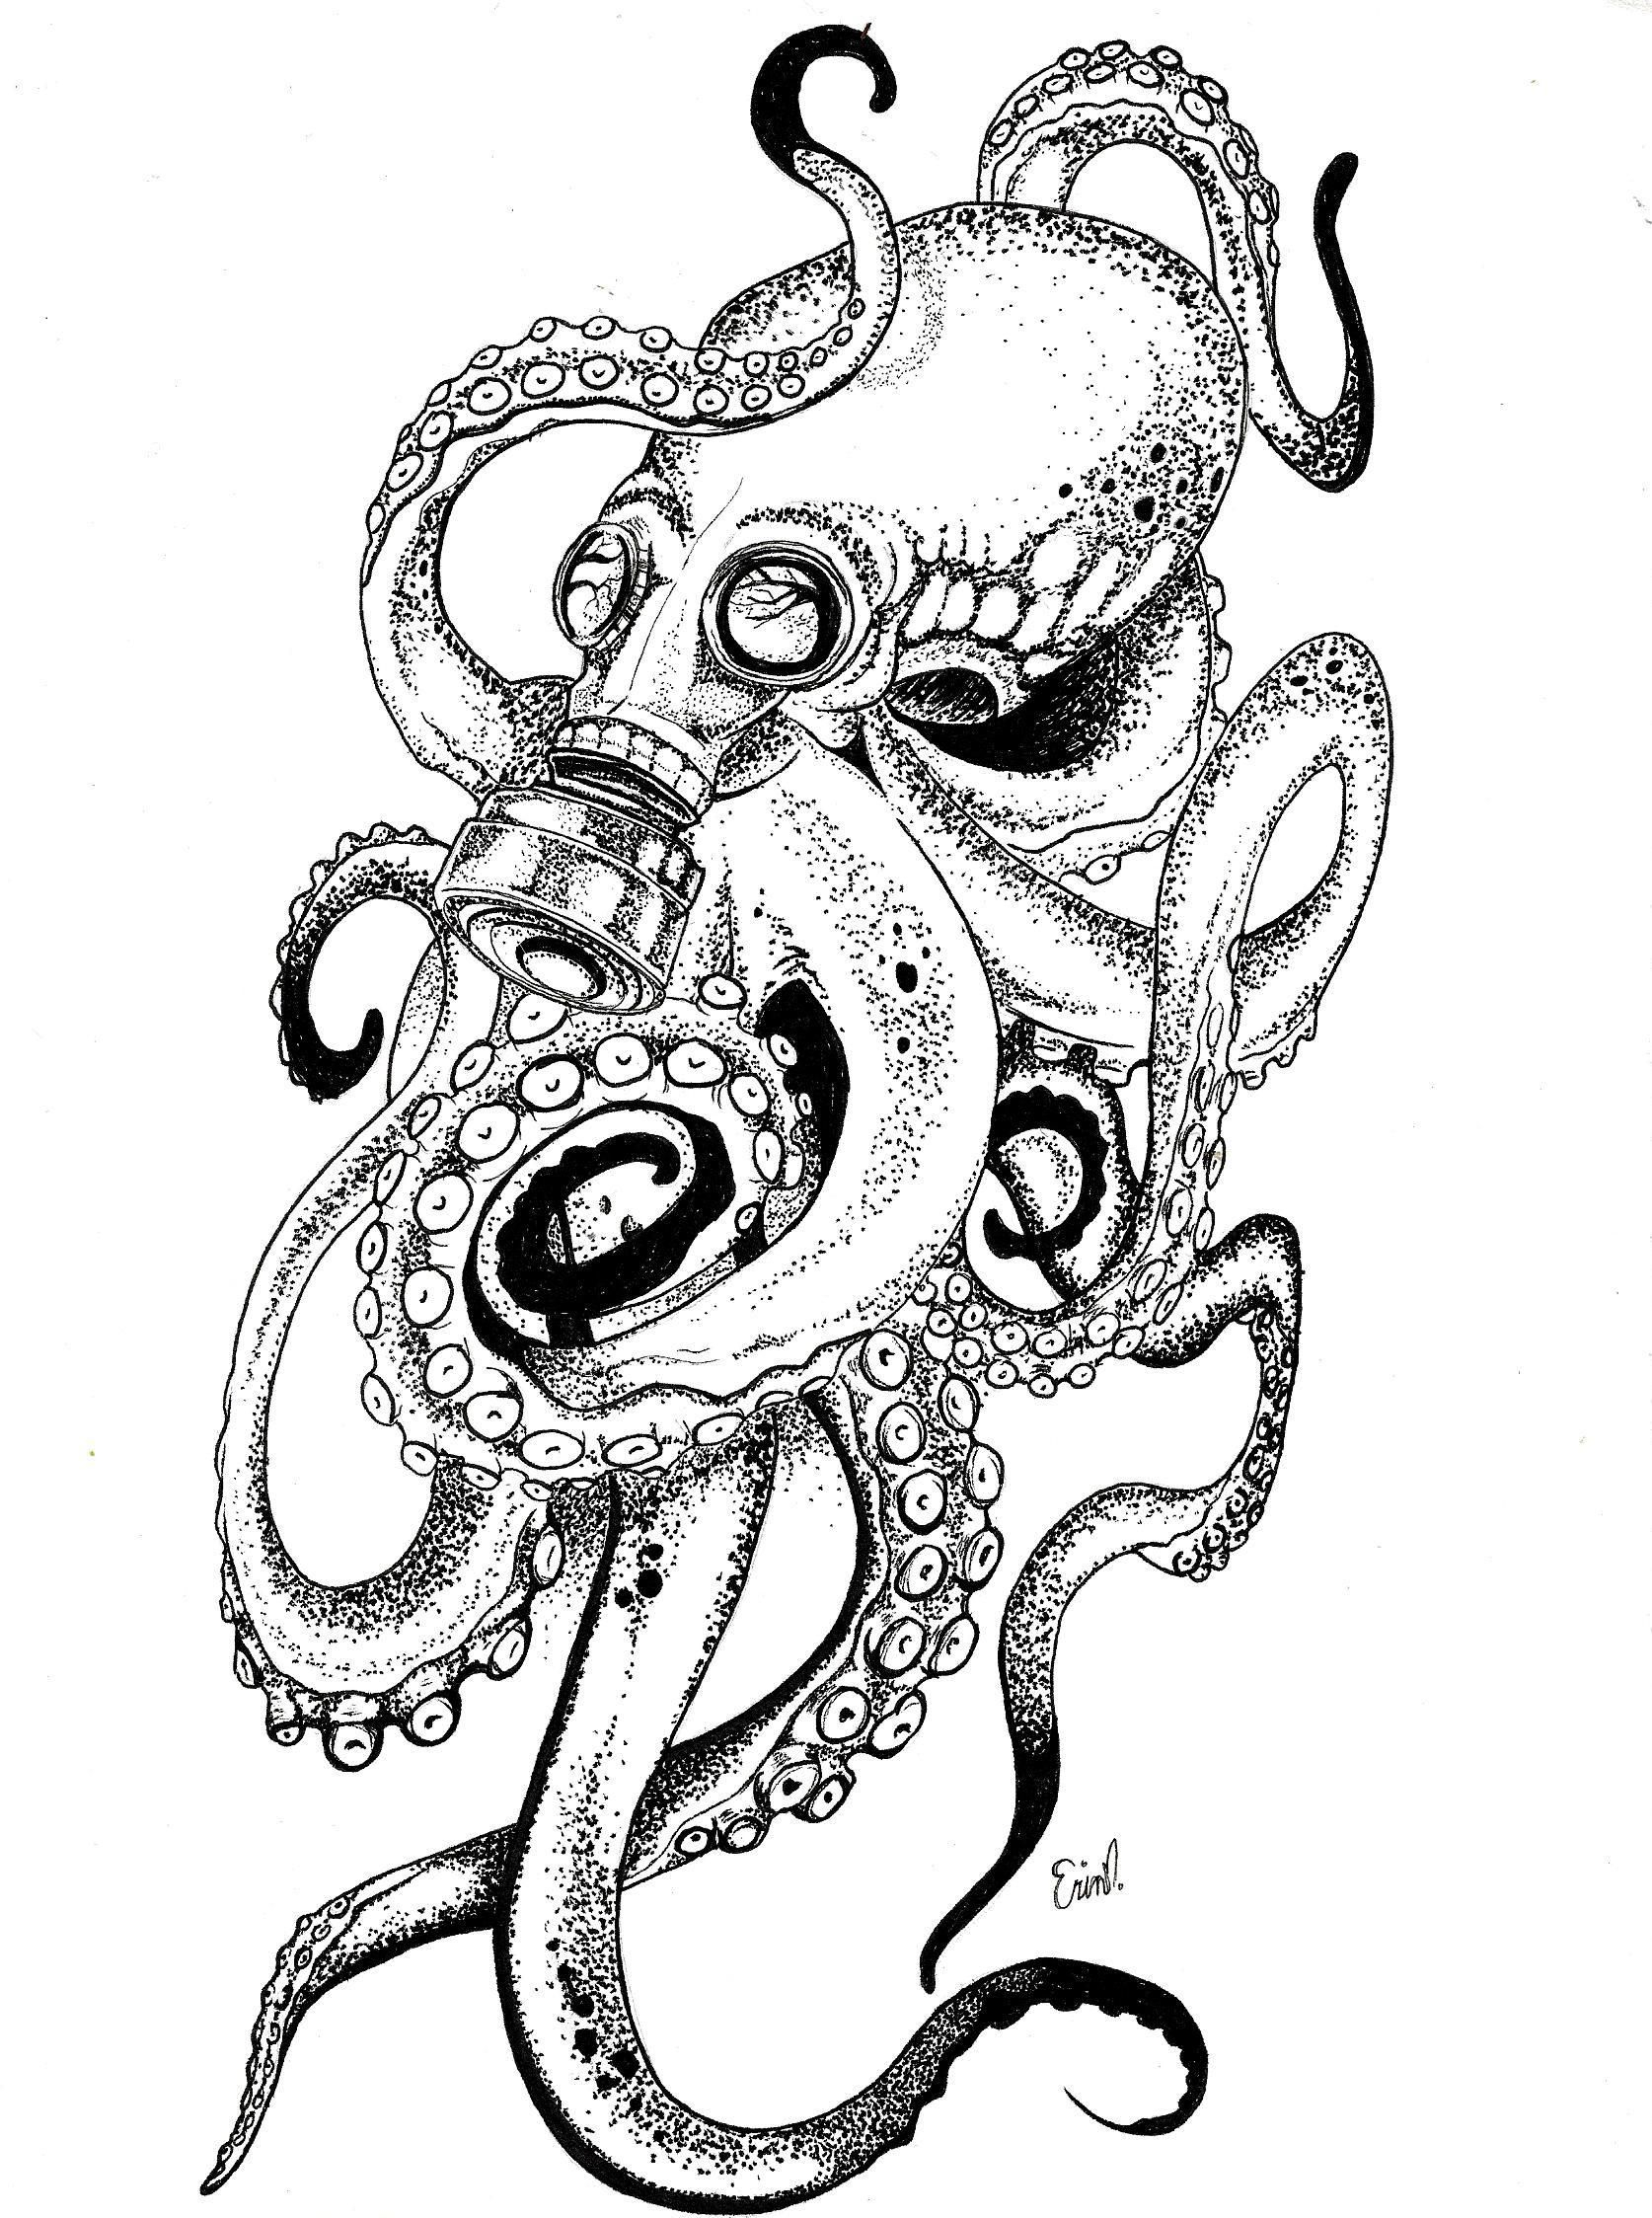 Realistic Octopus Drawing Professional Artwork